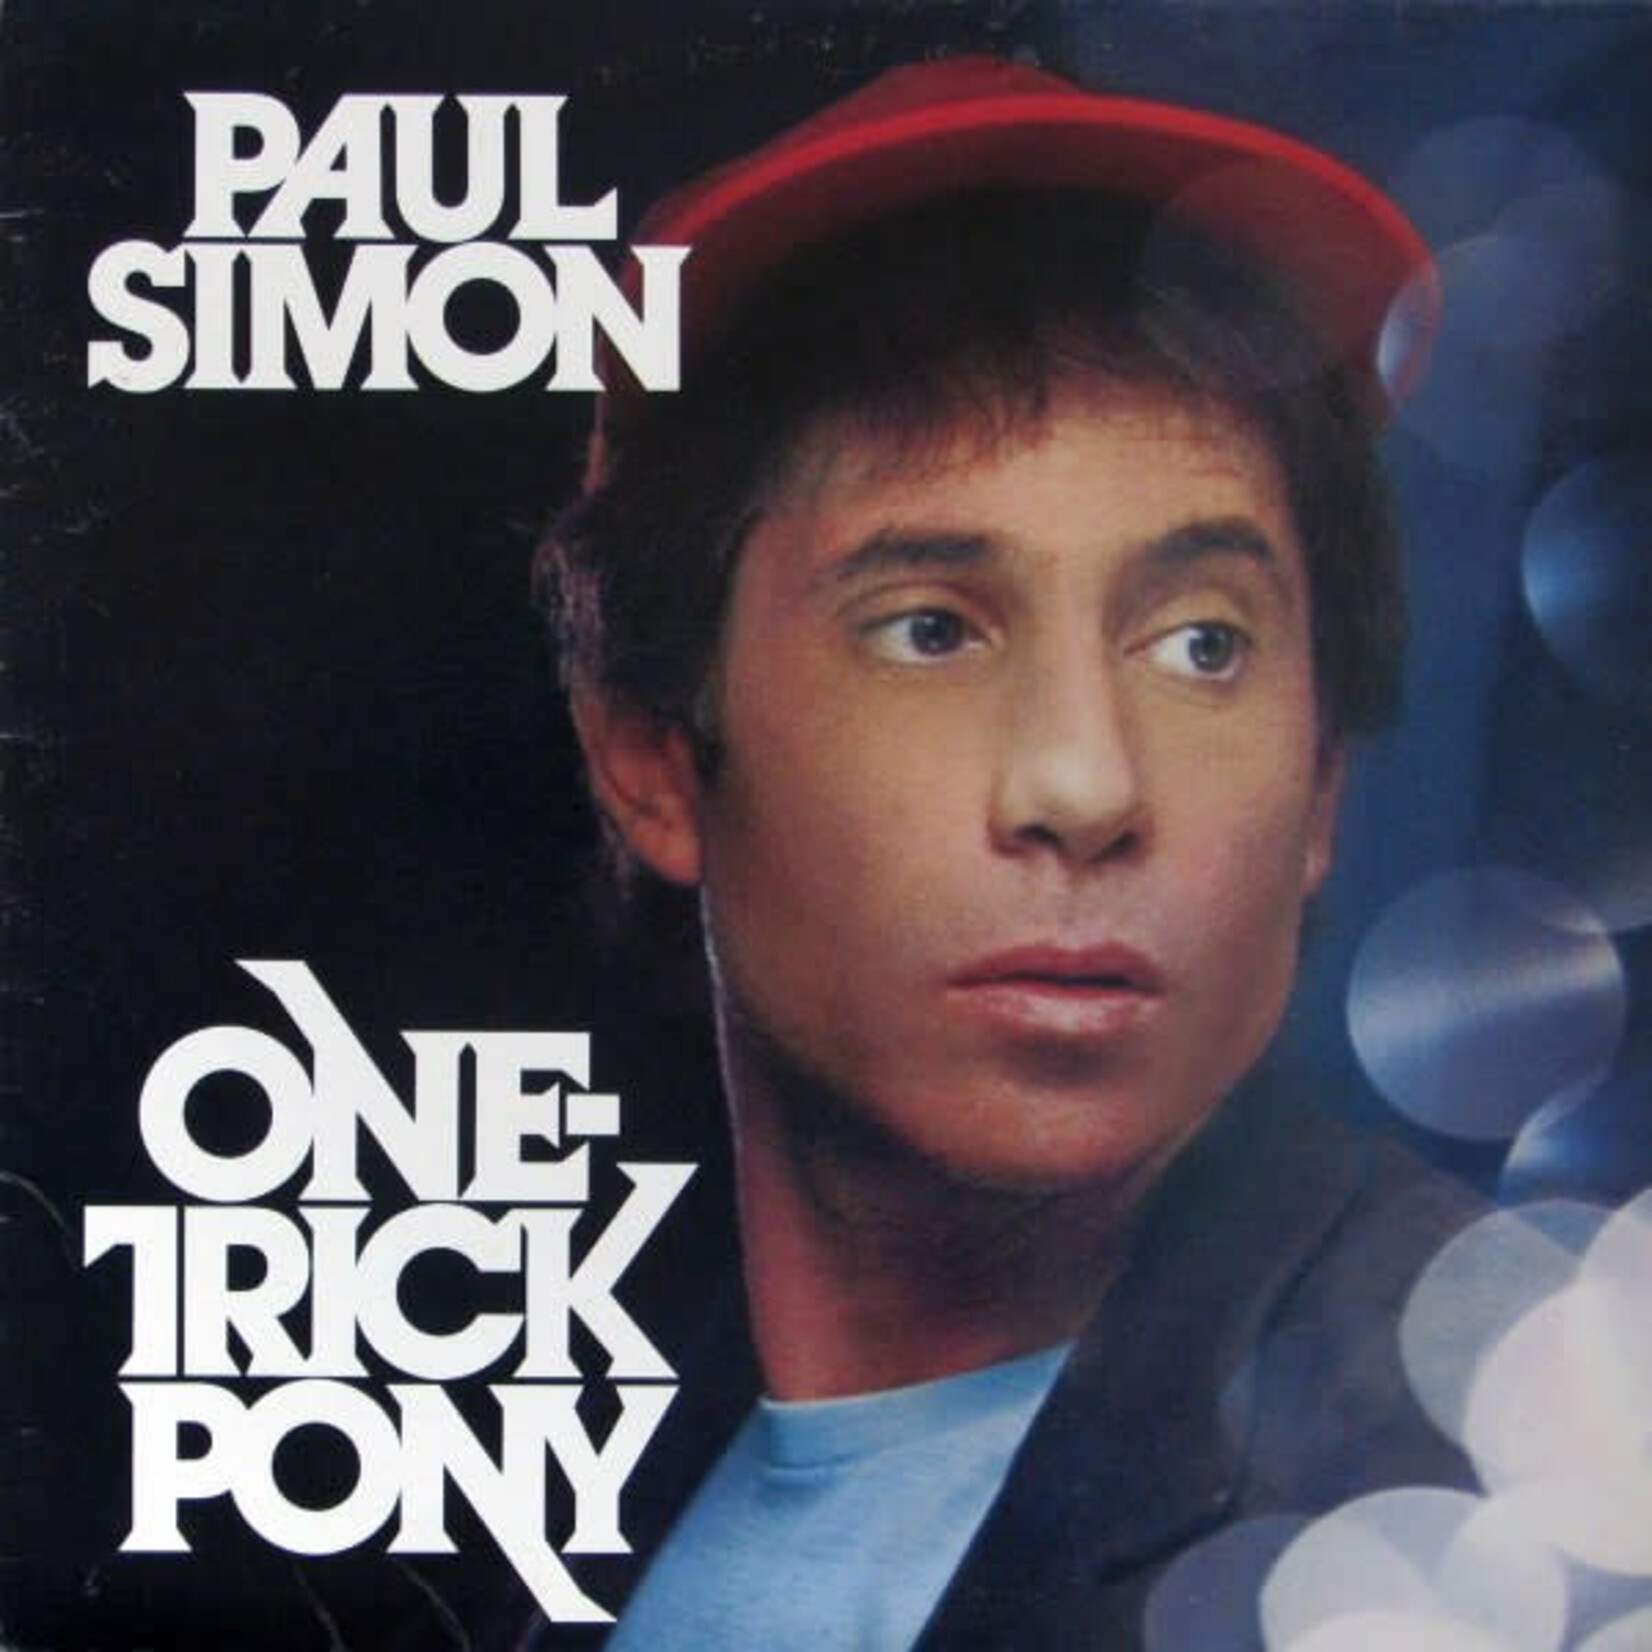 Paul Simon Paul Simon – One-Trick Pony (VG, 1980, LP, Warner Bros. Records – XHS 3472)